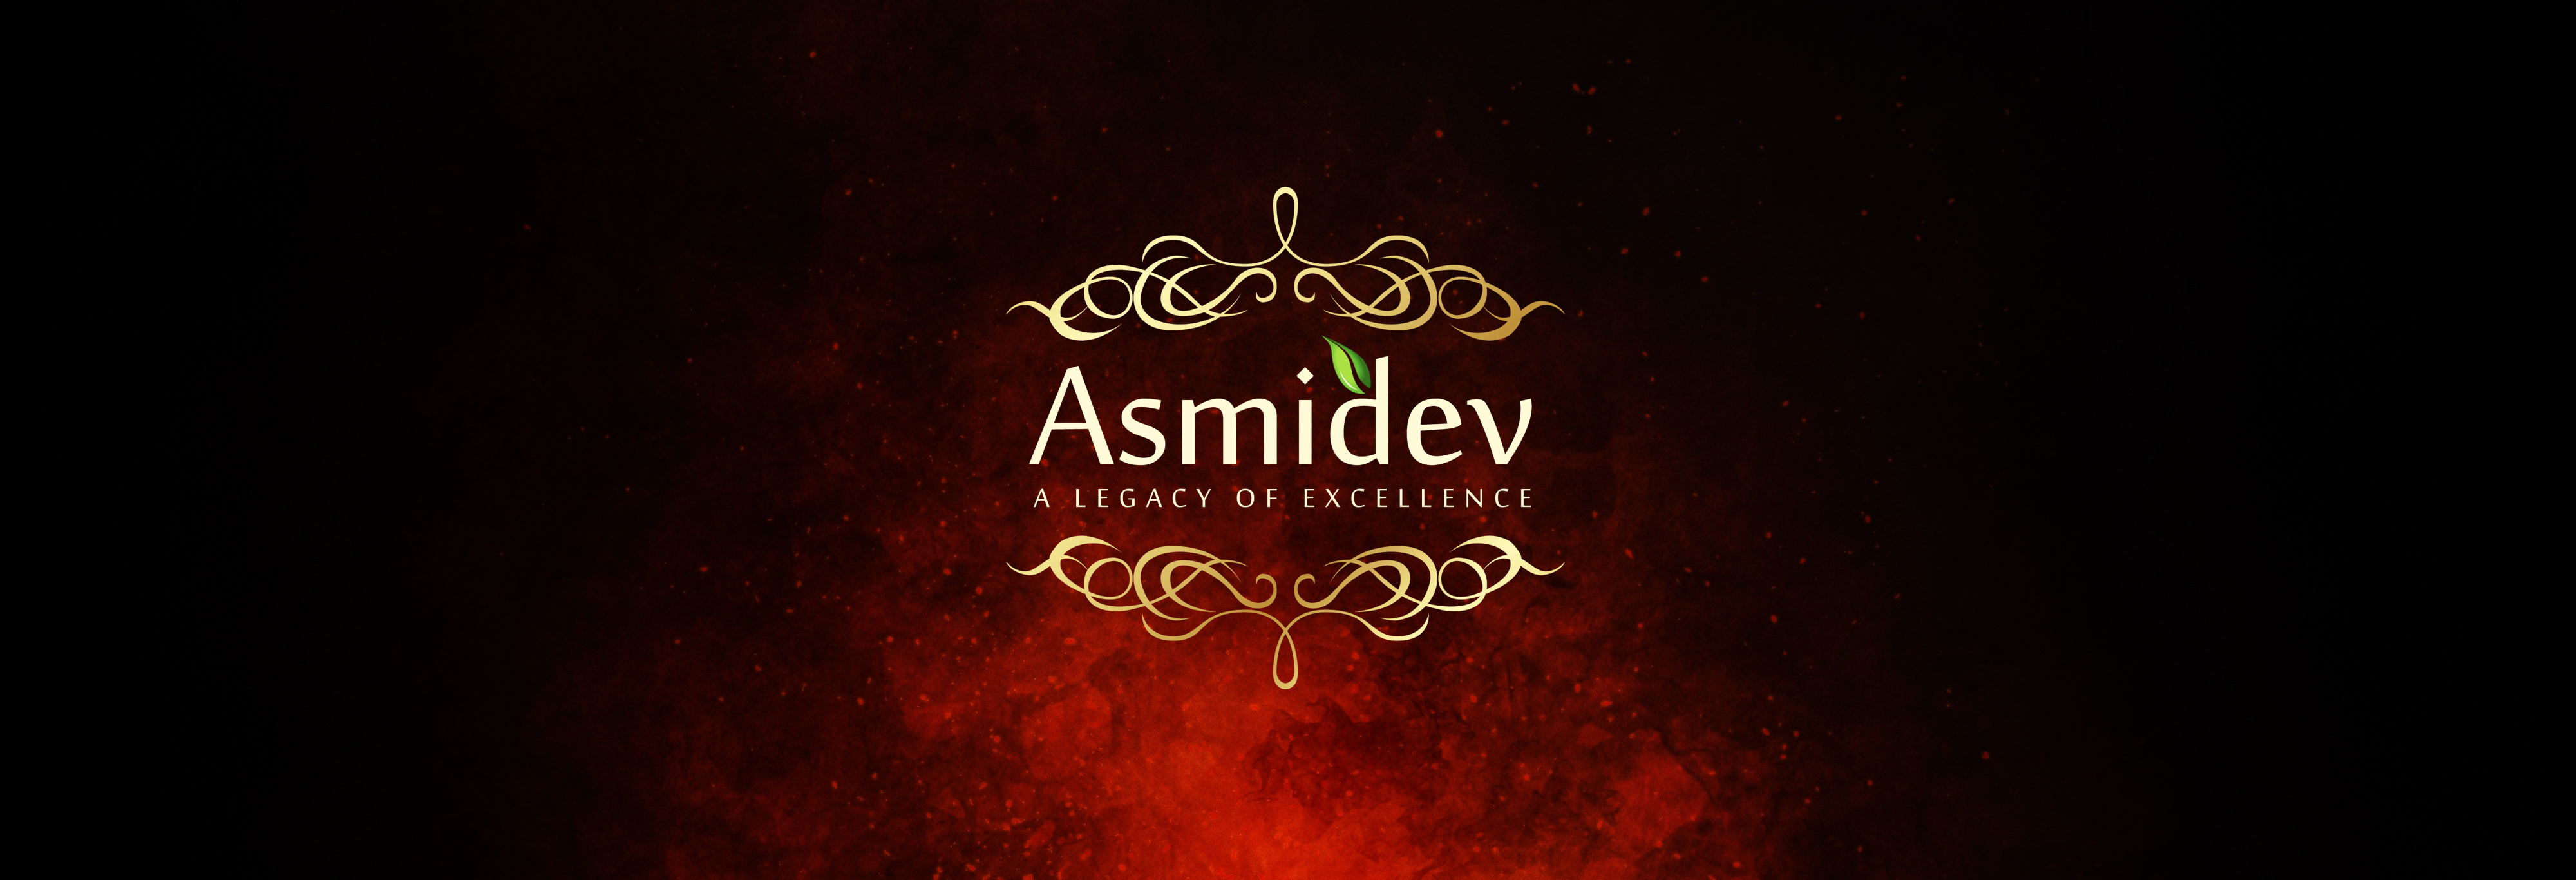 About Asmidev